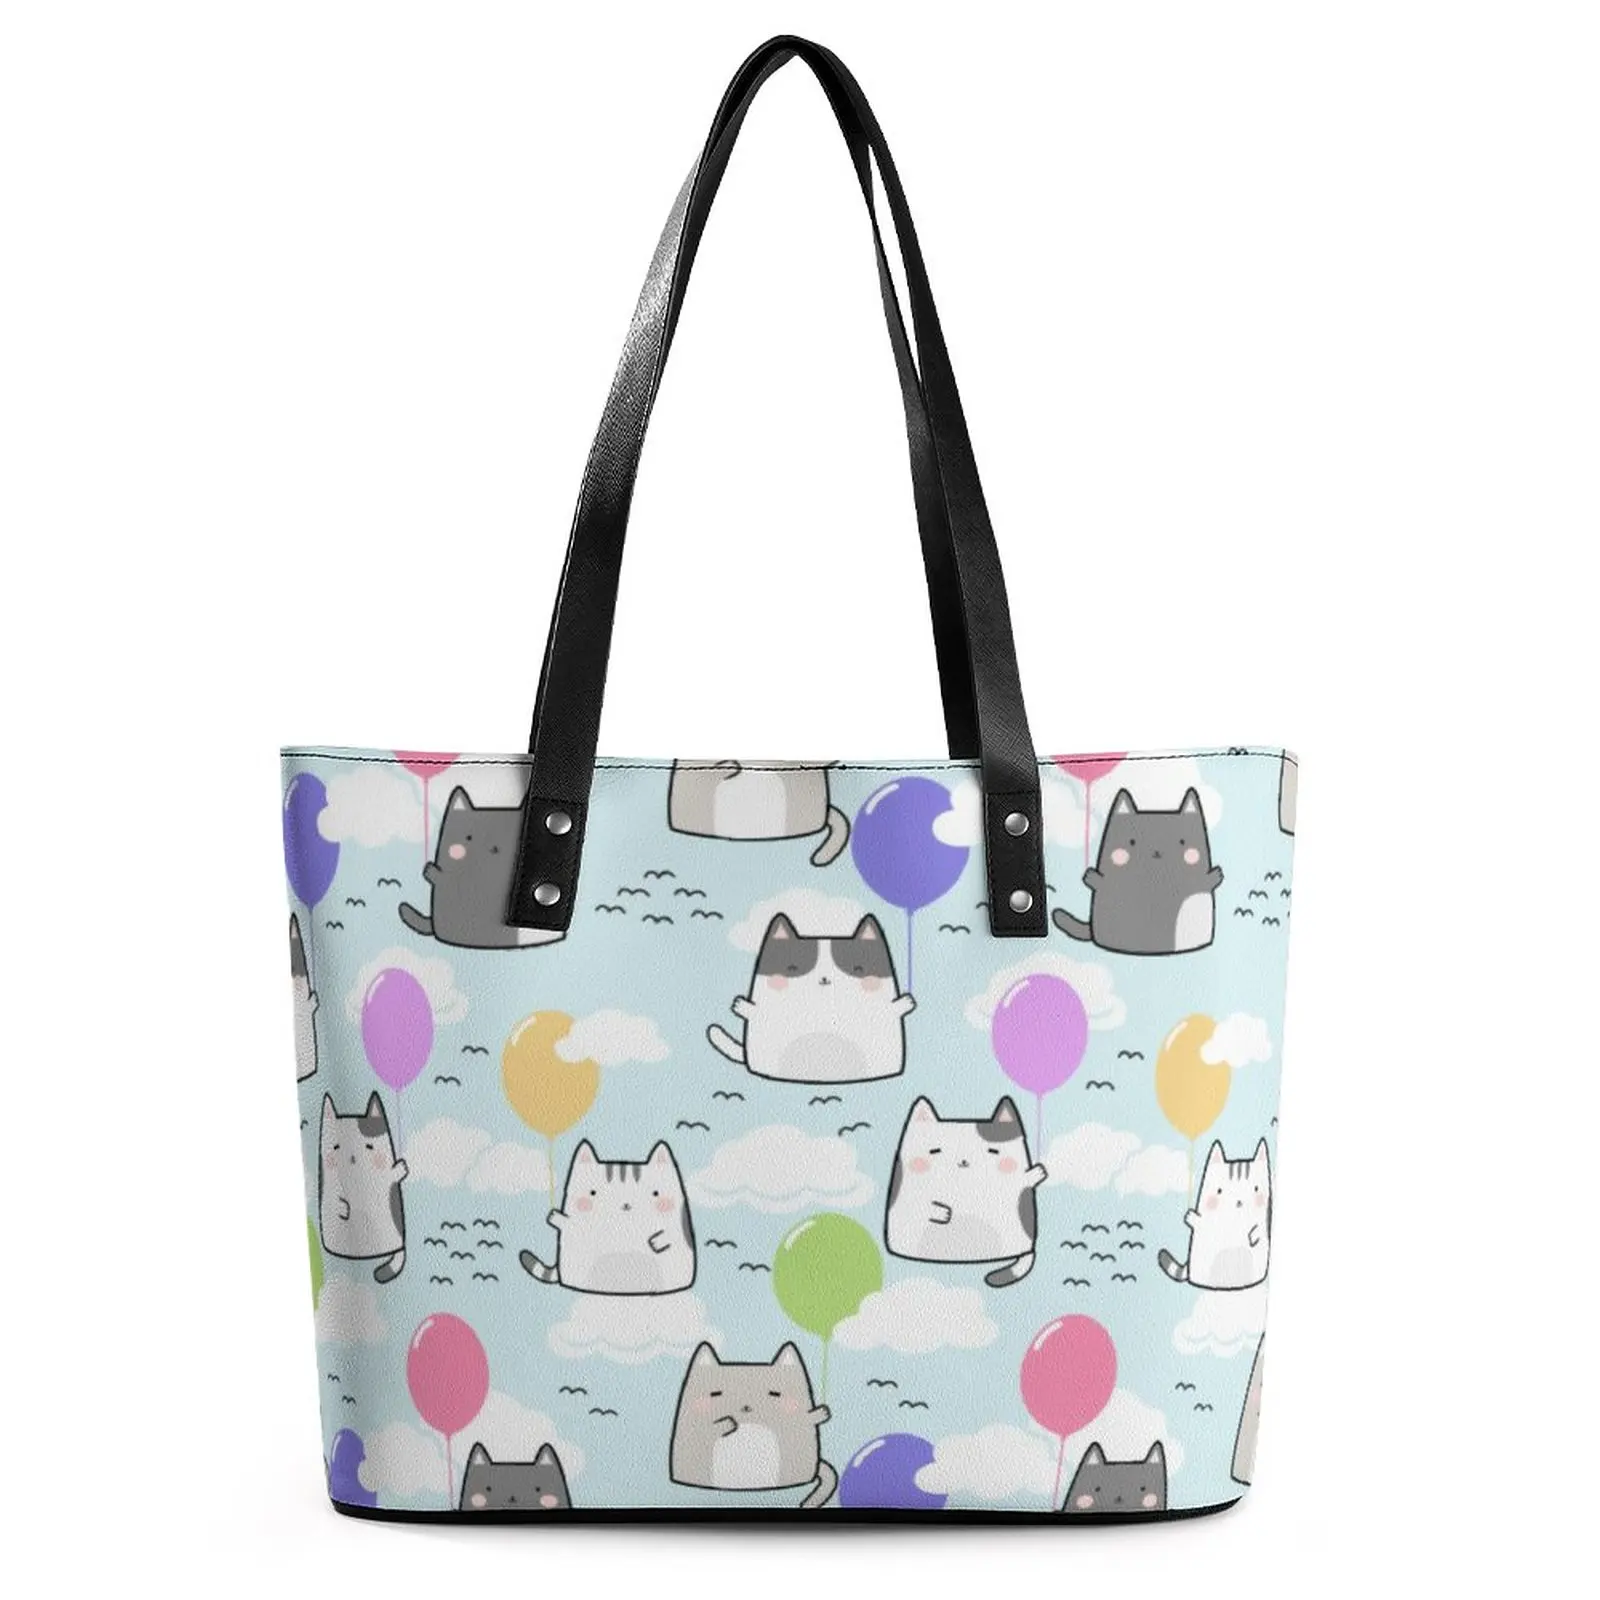 Funny Japanese Anime Handbags Cute Kawaii Cats Leisure Shoulder Bag Business PU Leather Tote Bag Lady Pocket Print Shopper Bags